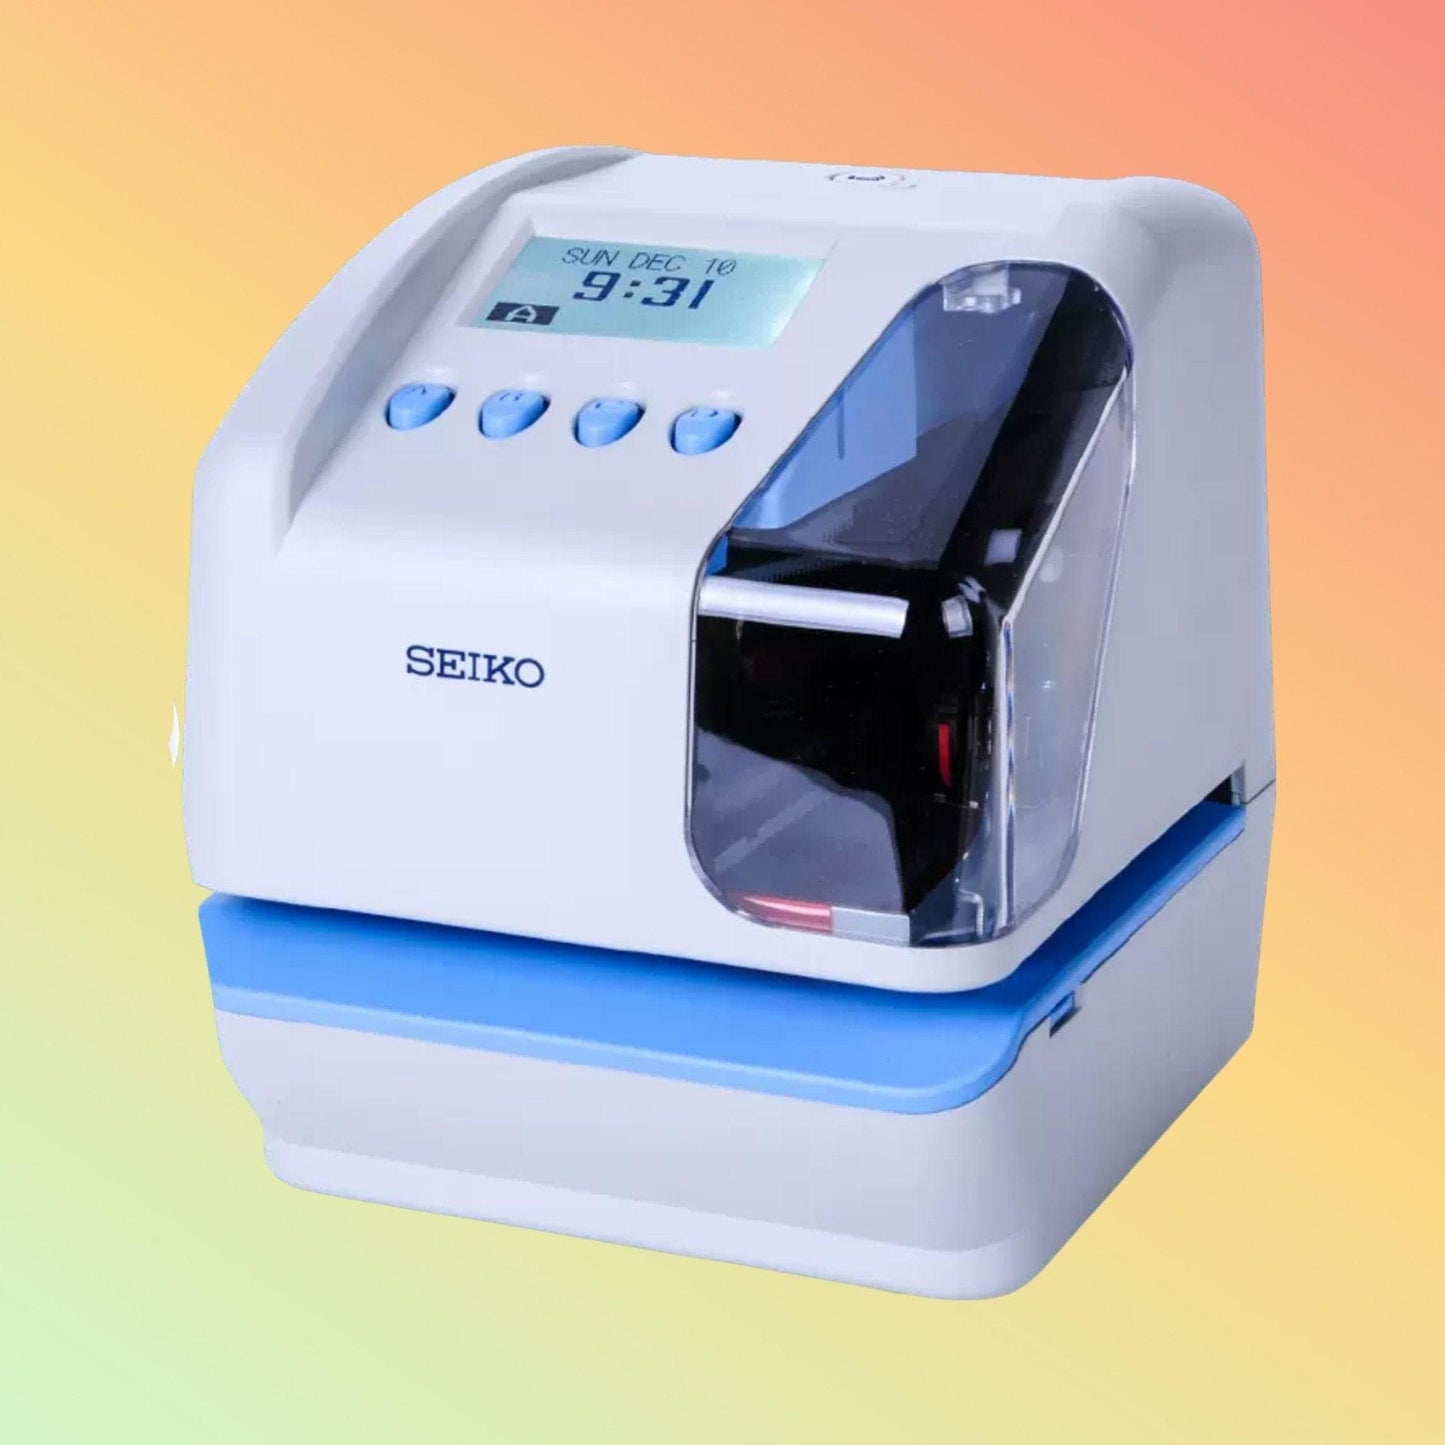 Seiko TP-50 Precision Time & Date Stamp Machine